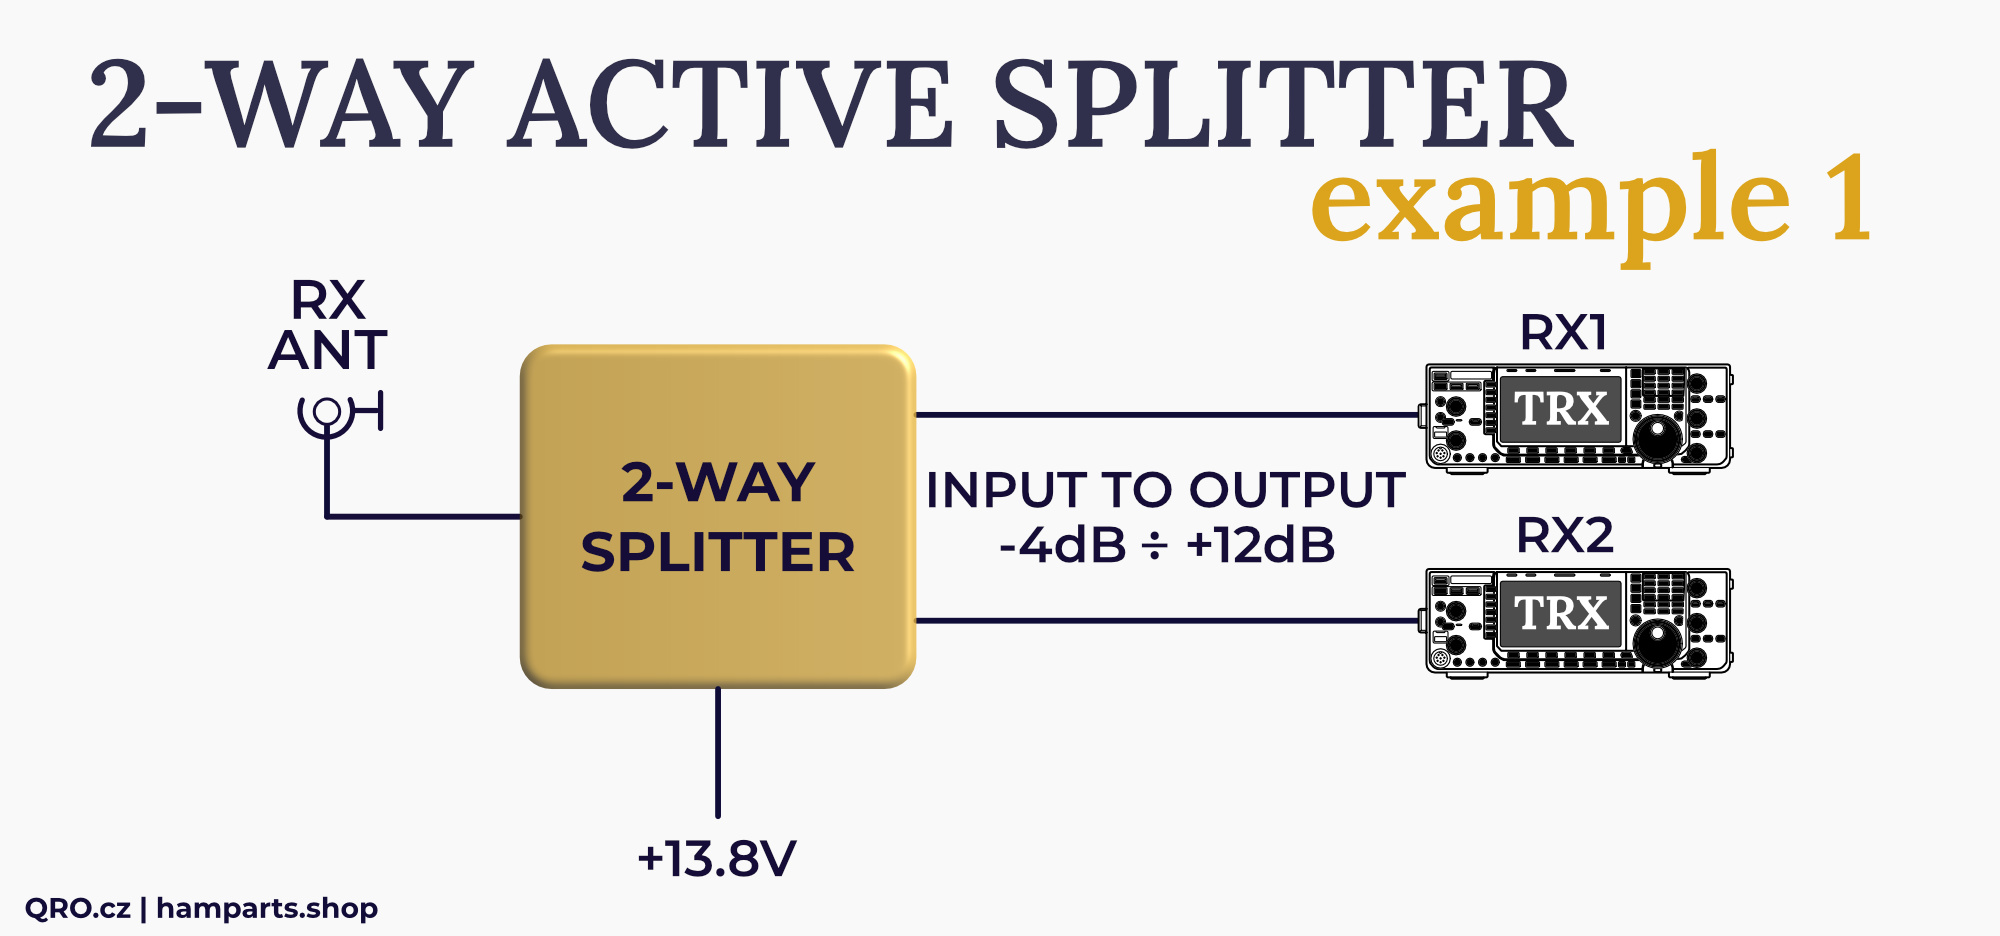 2way active splitter by qro.cz hamparts.shop